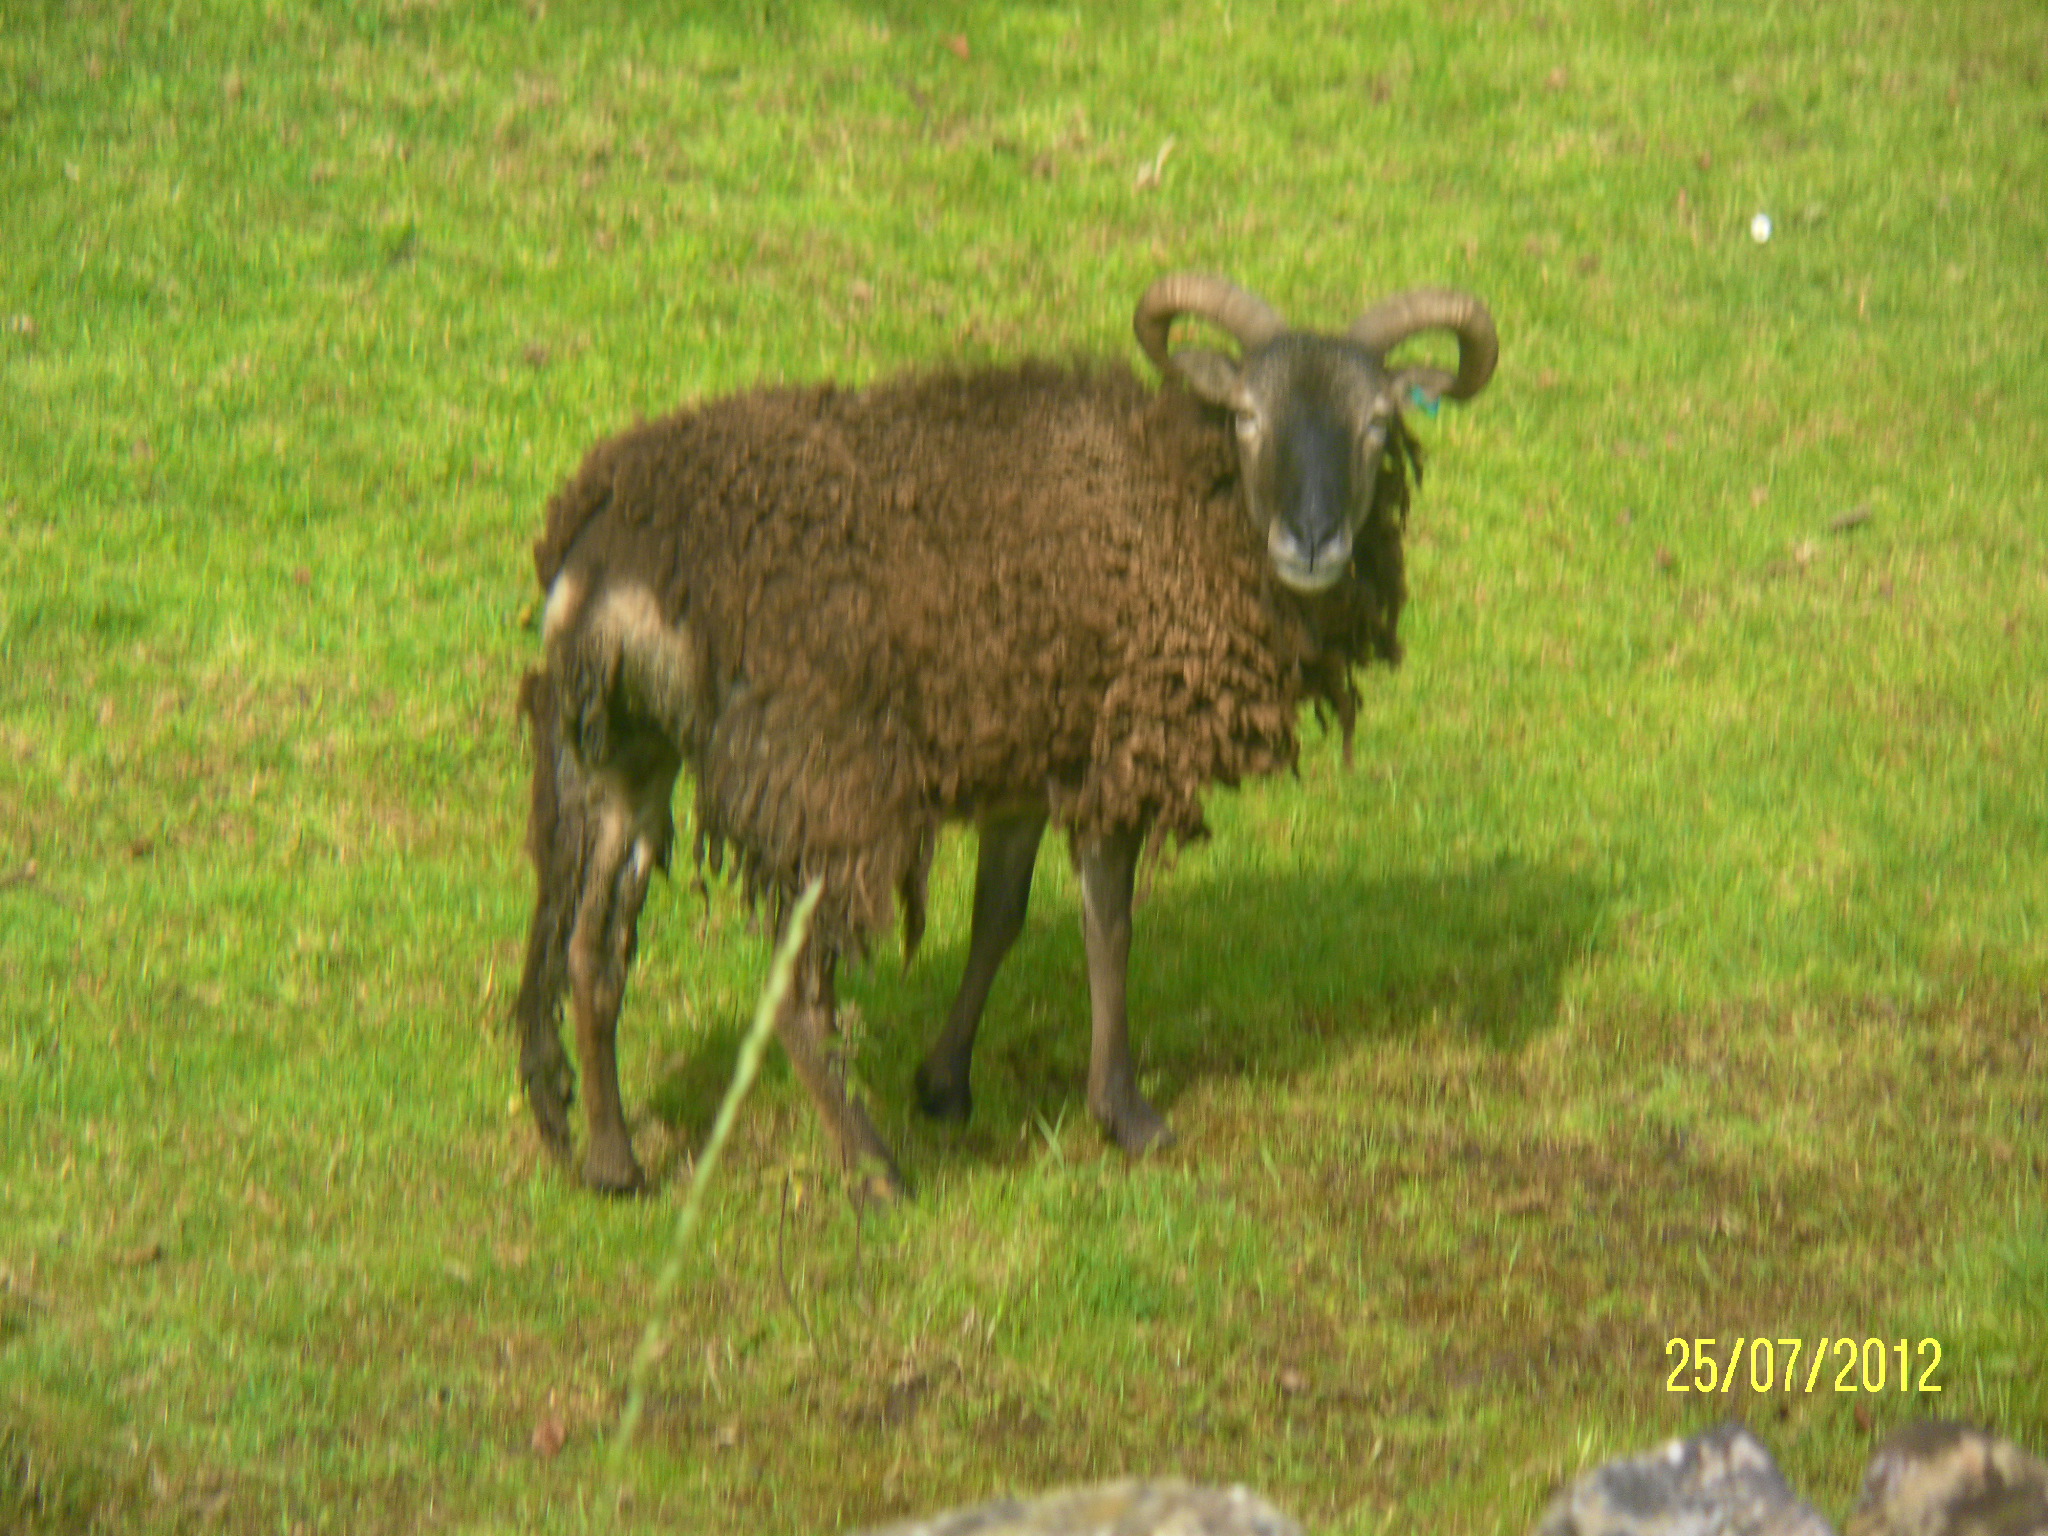 Scraggy Looking Sheep